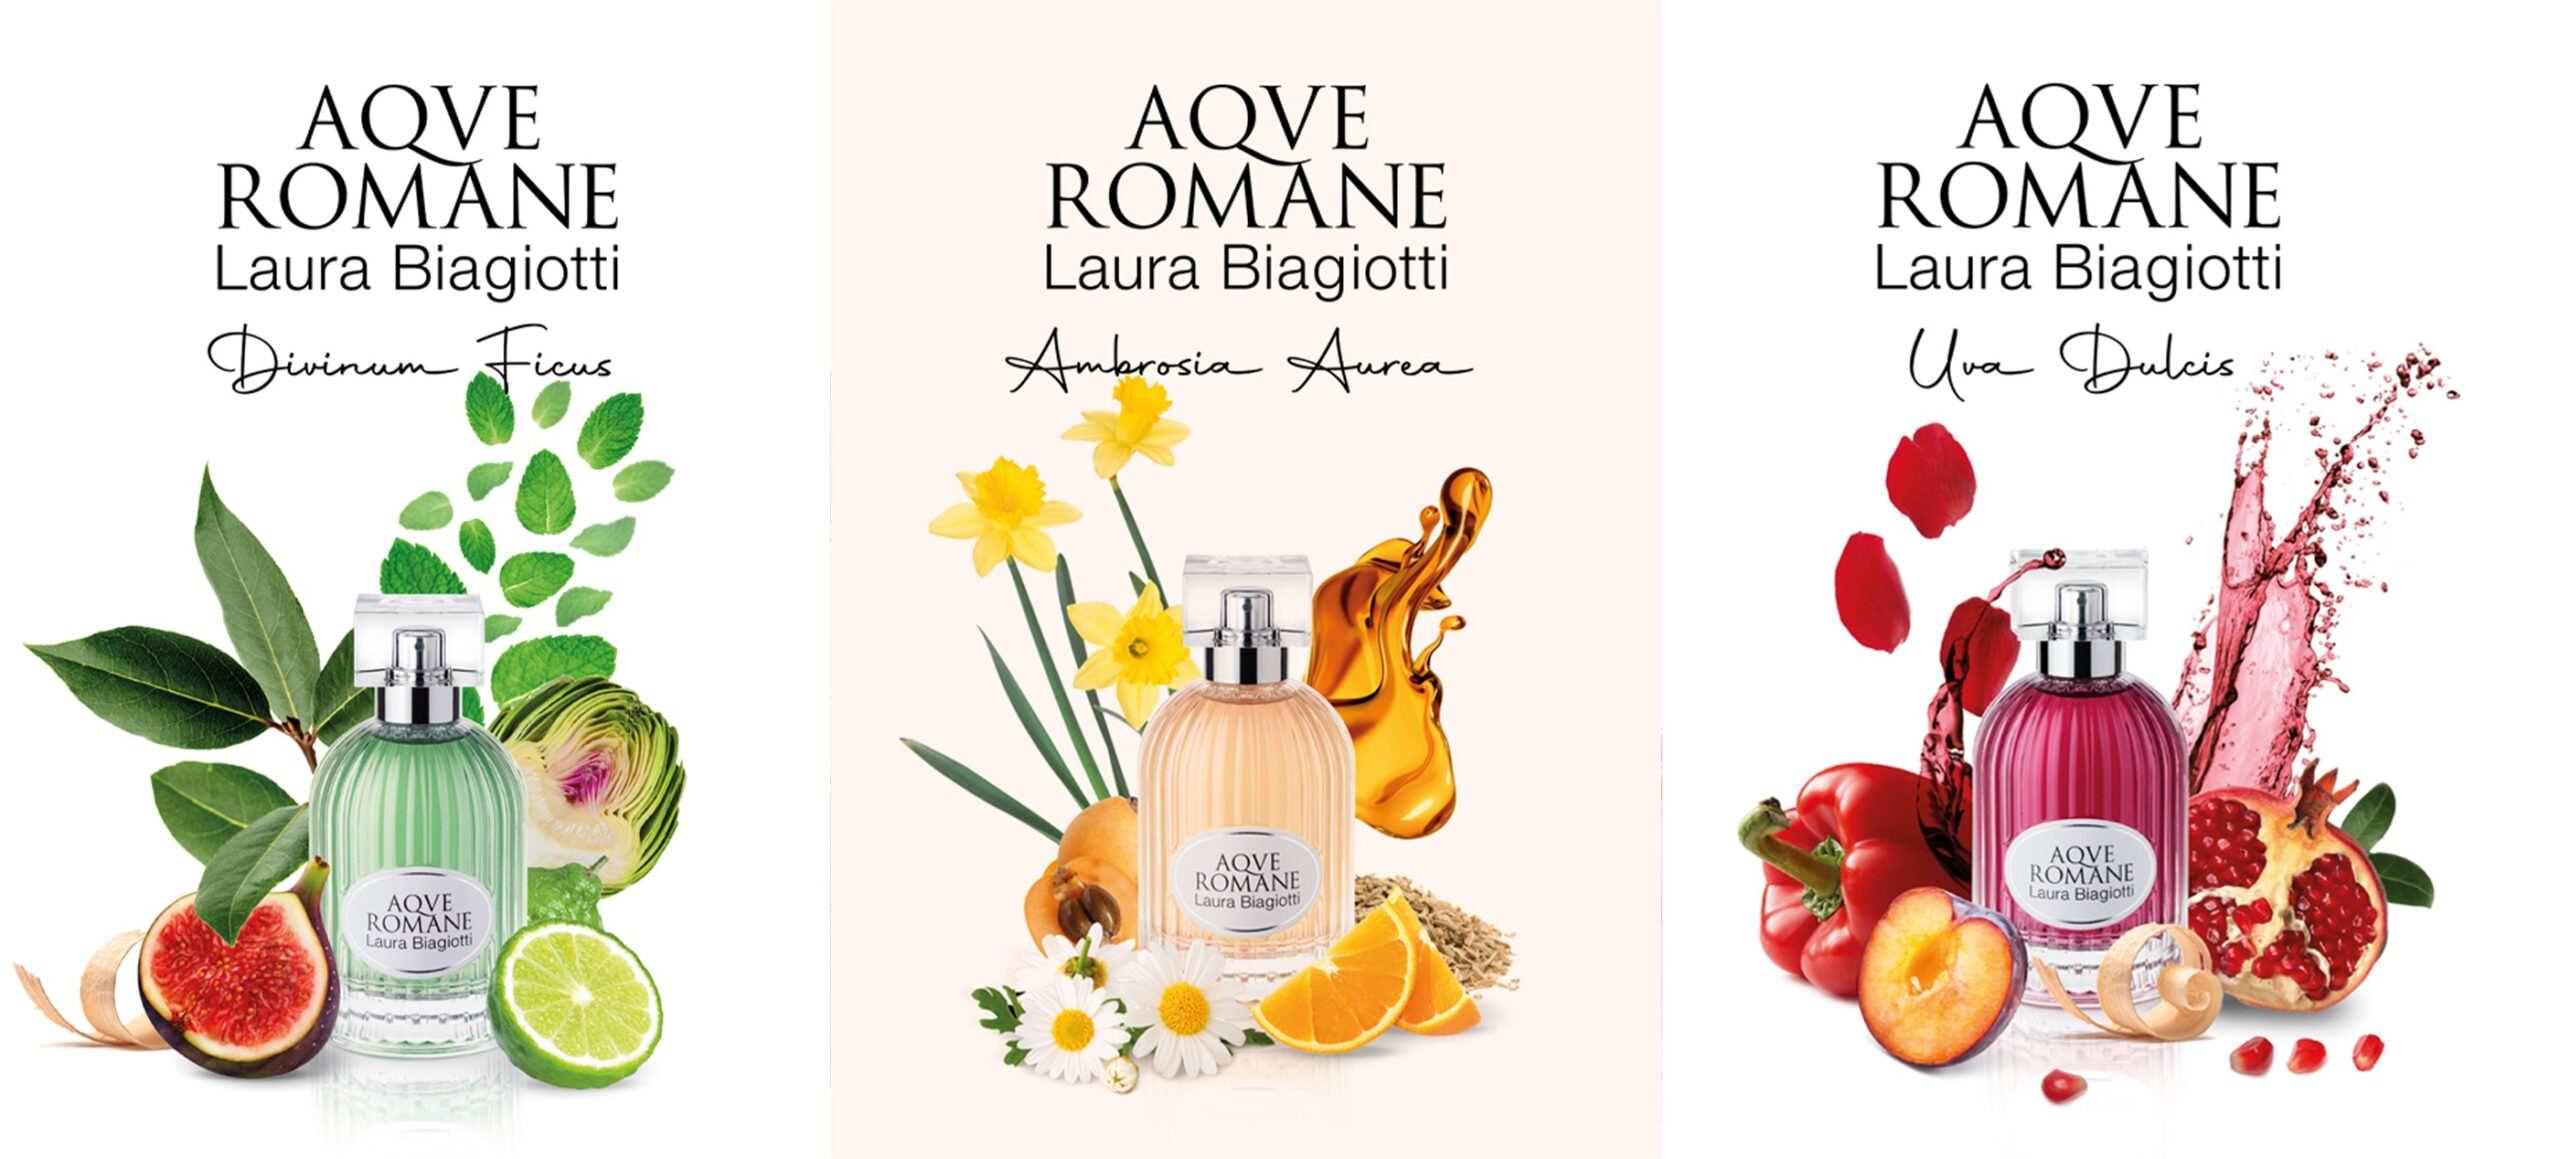 laura biagiotti aqve romane new fragrances